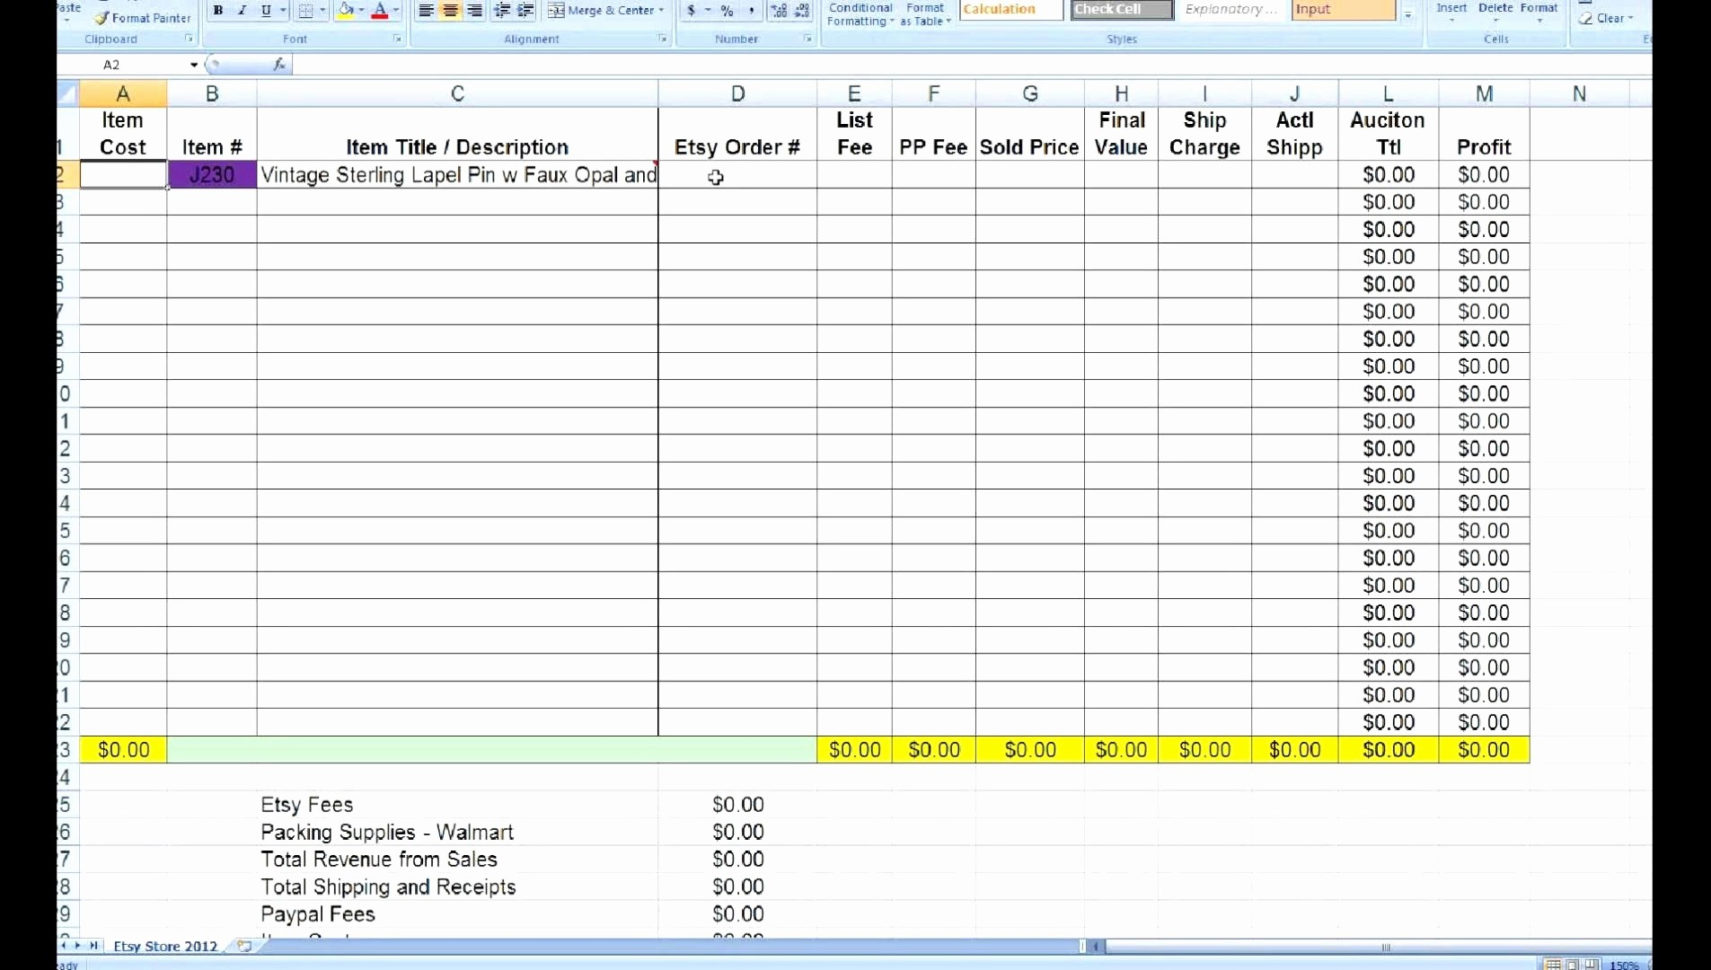 fmla-leave-tracking-spreadsheet-regarding-fmla-leave-tracker-form-db-excel